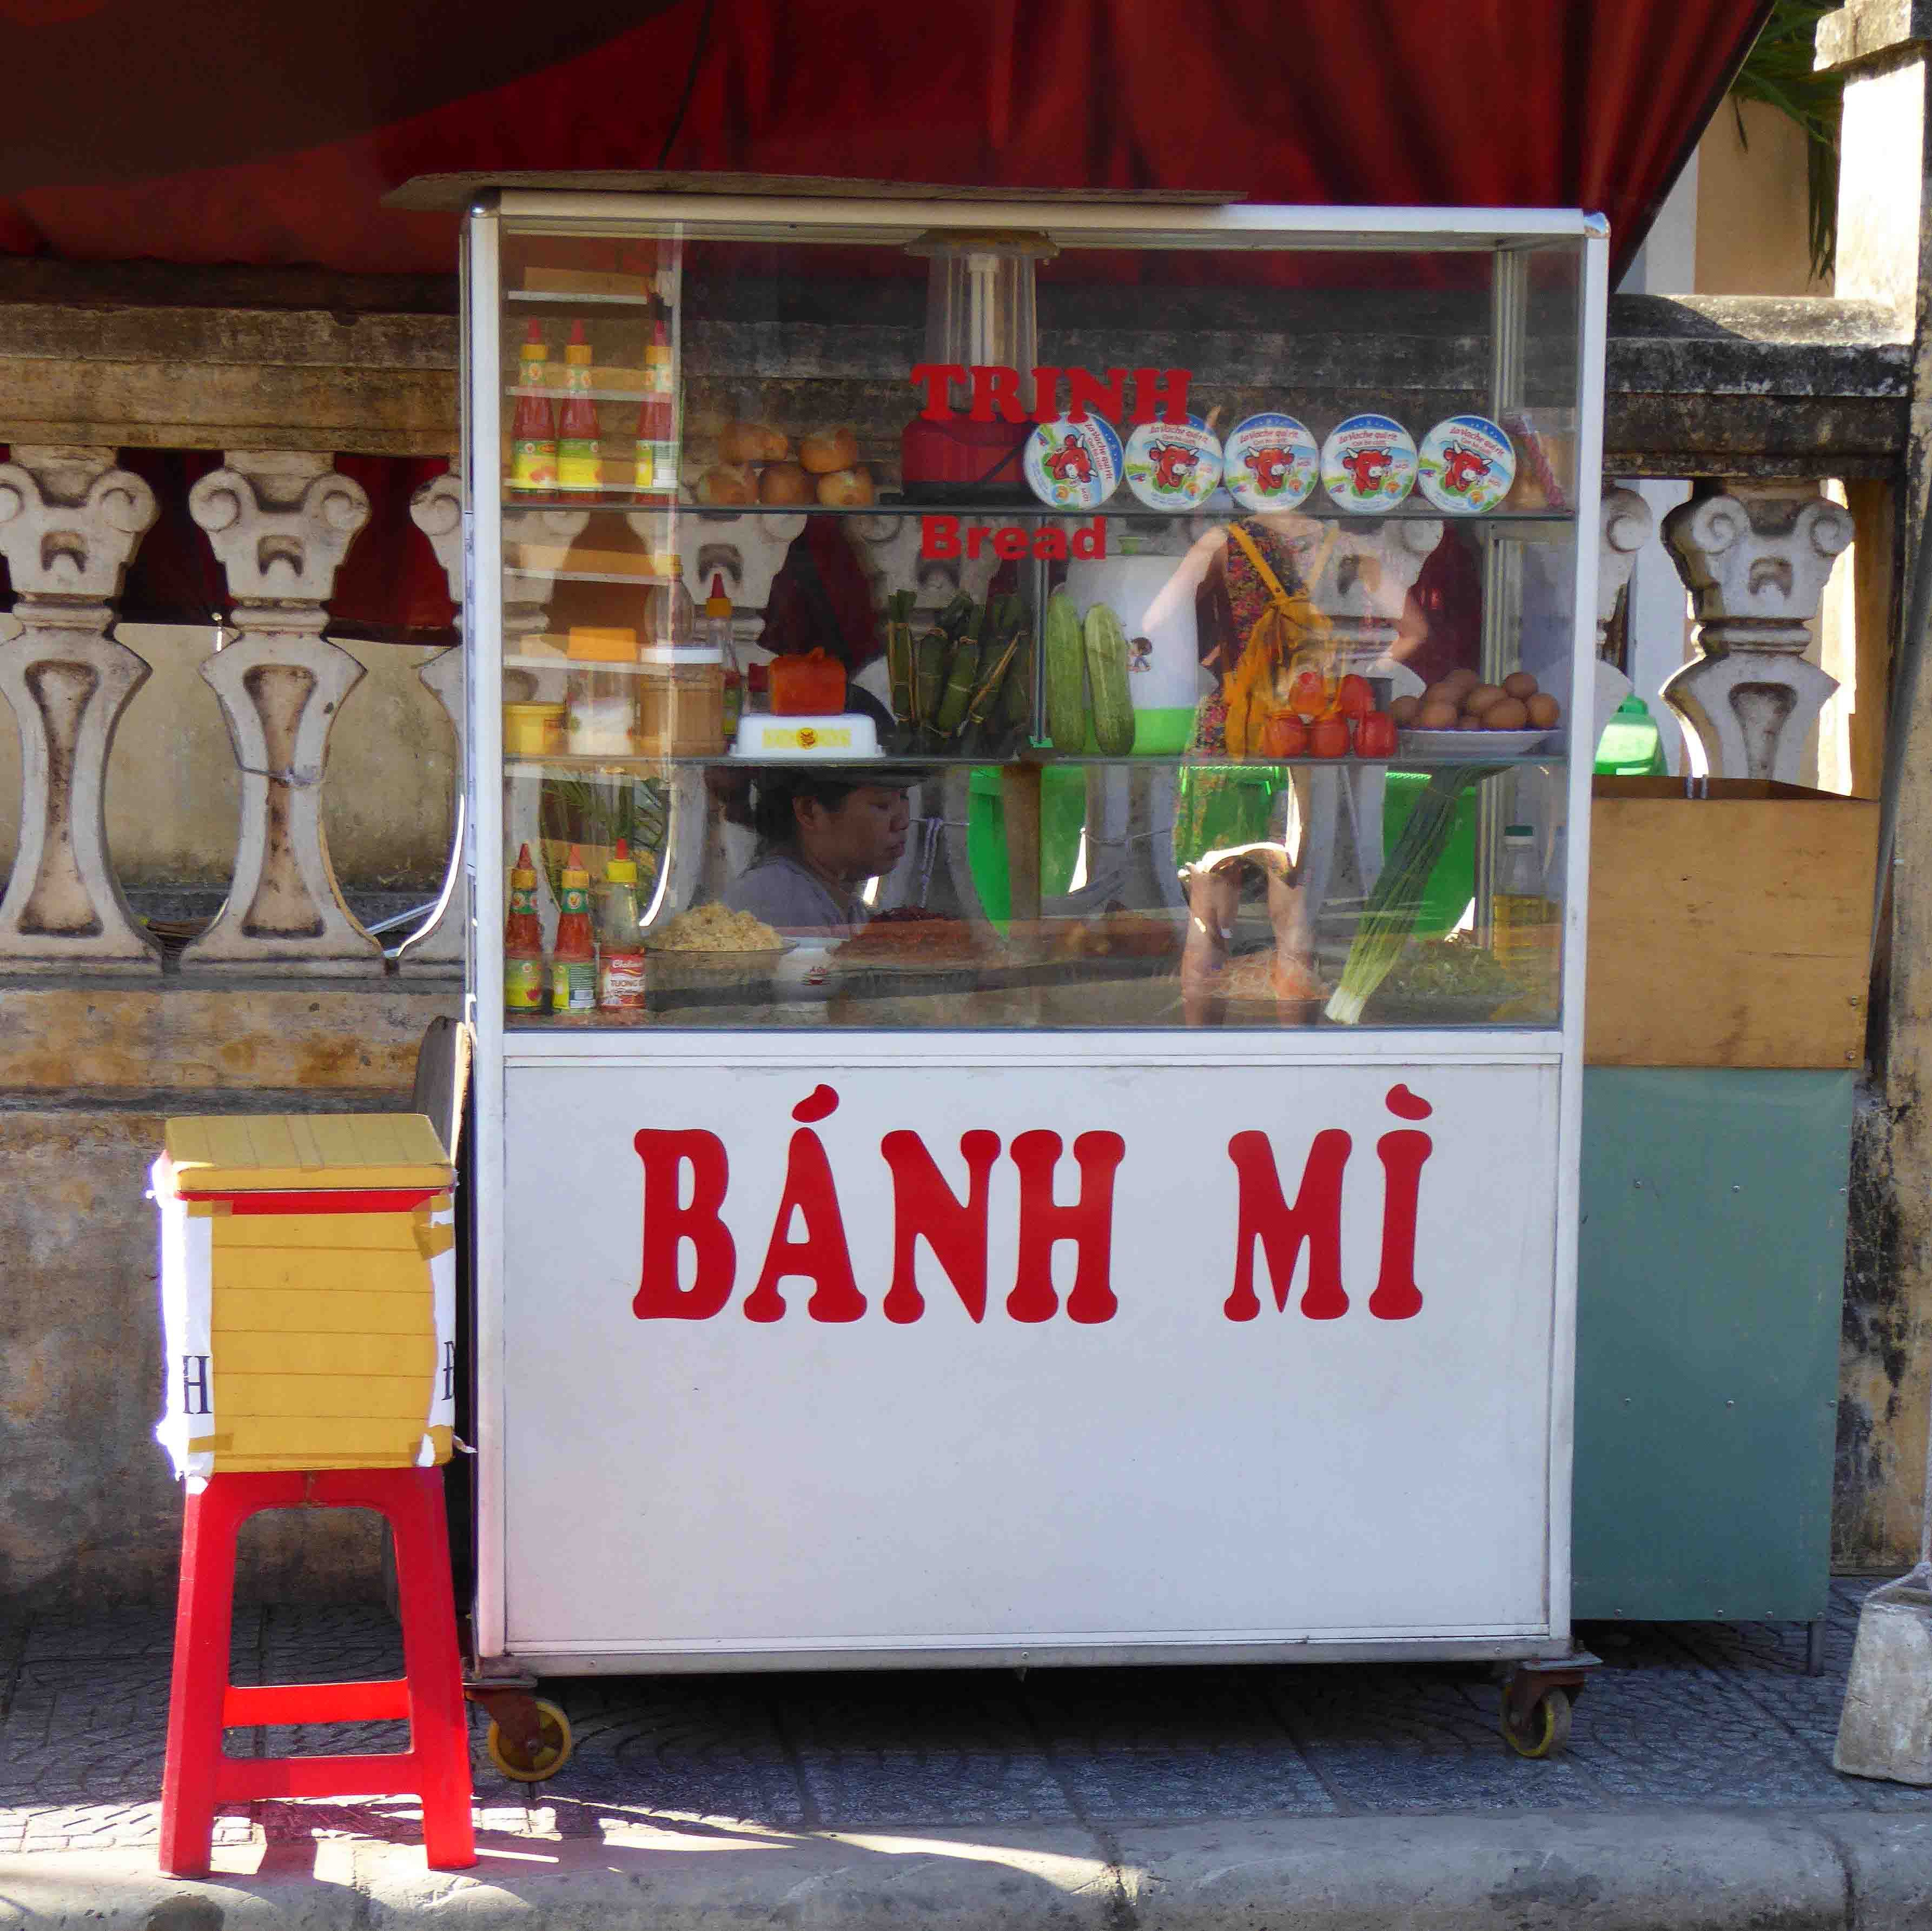 Banh mi street food stall in Hoi An, Vietnam | Vietnam | Pinterest ...